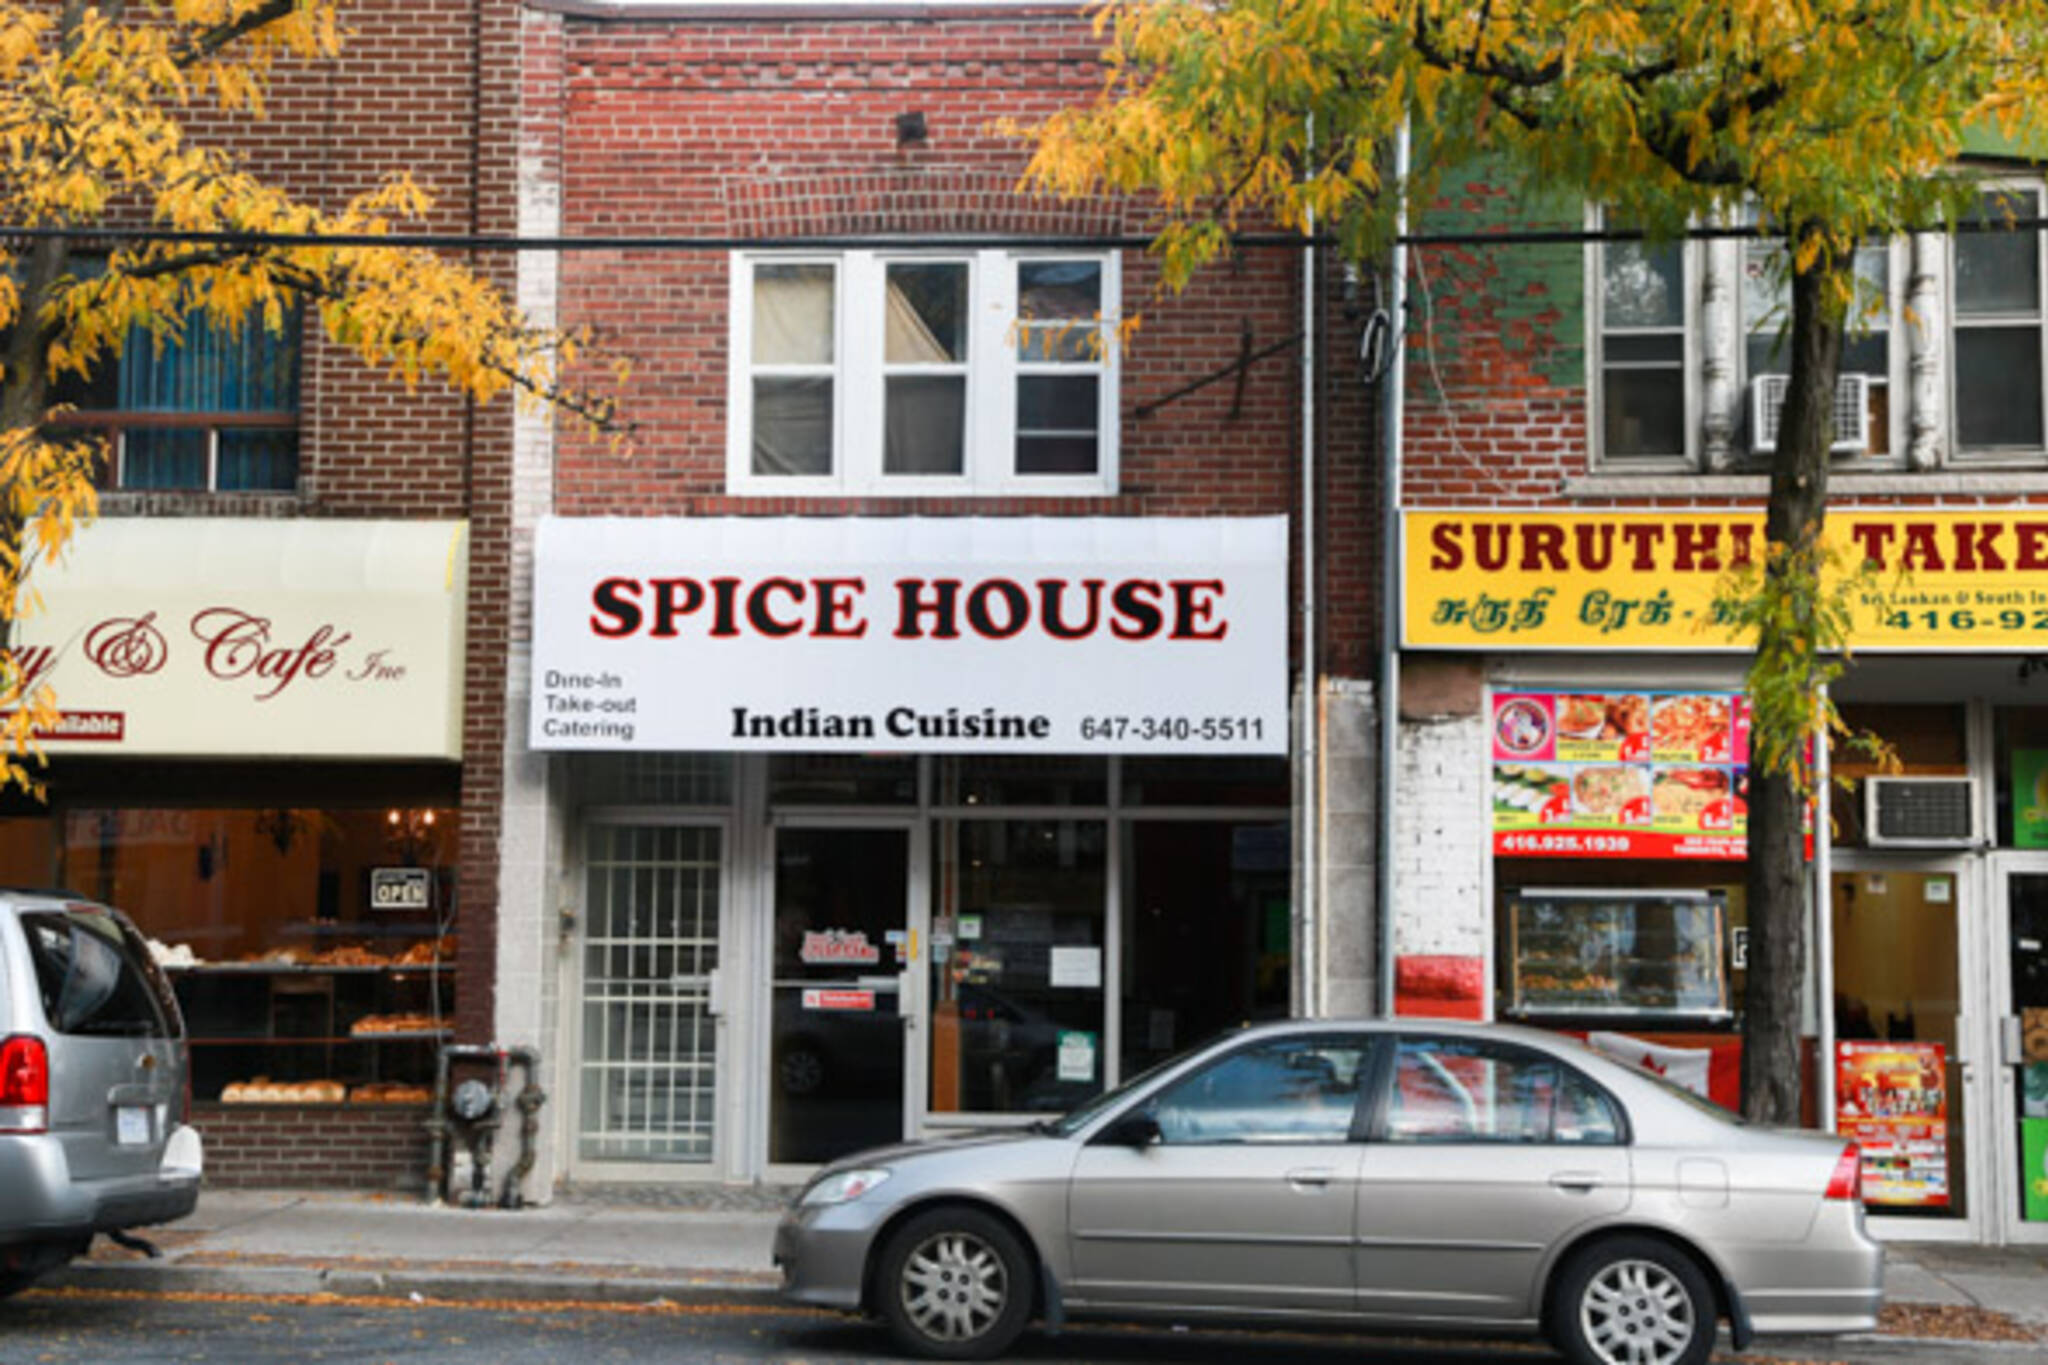 spice house